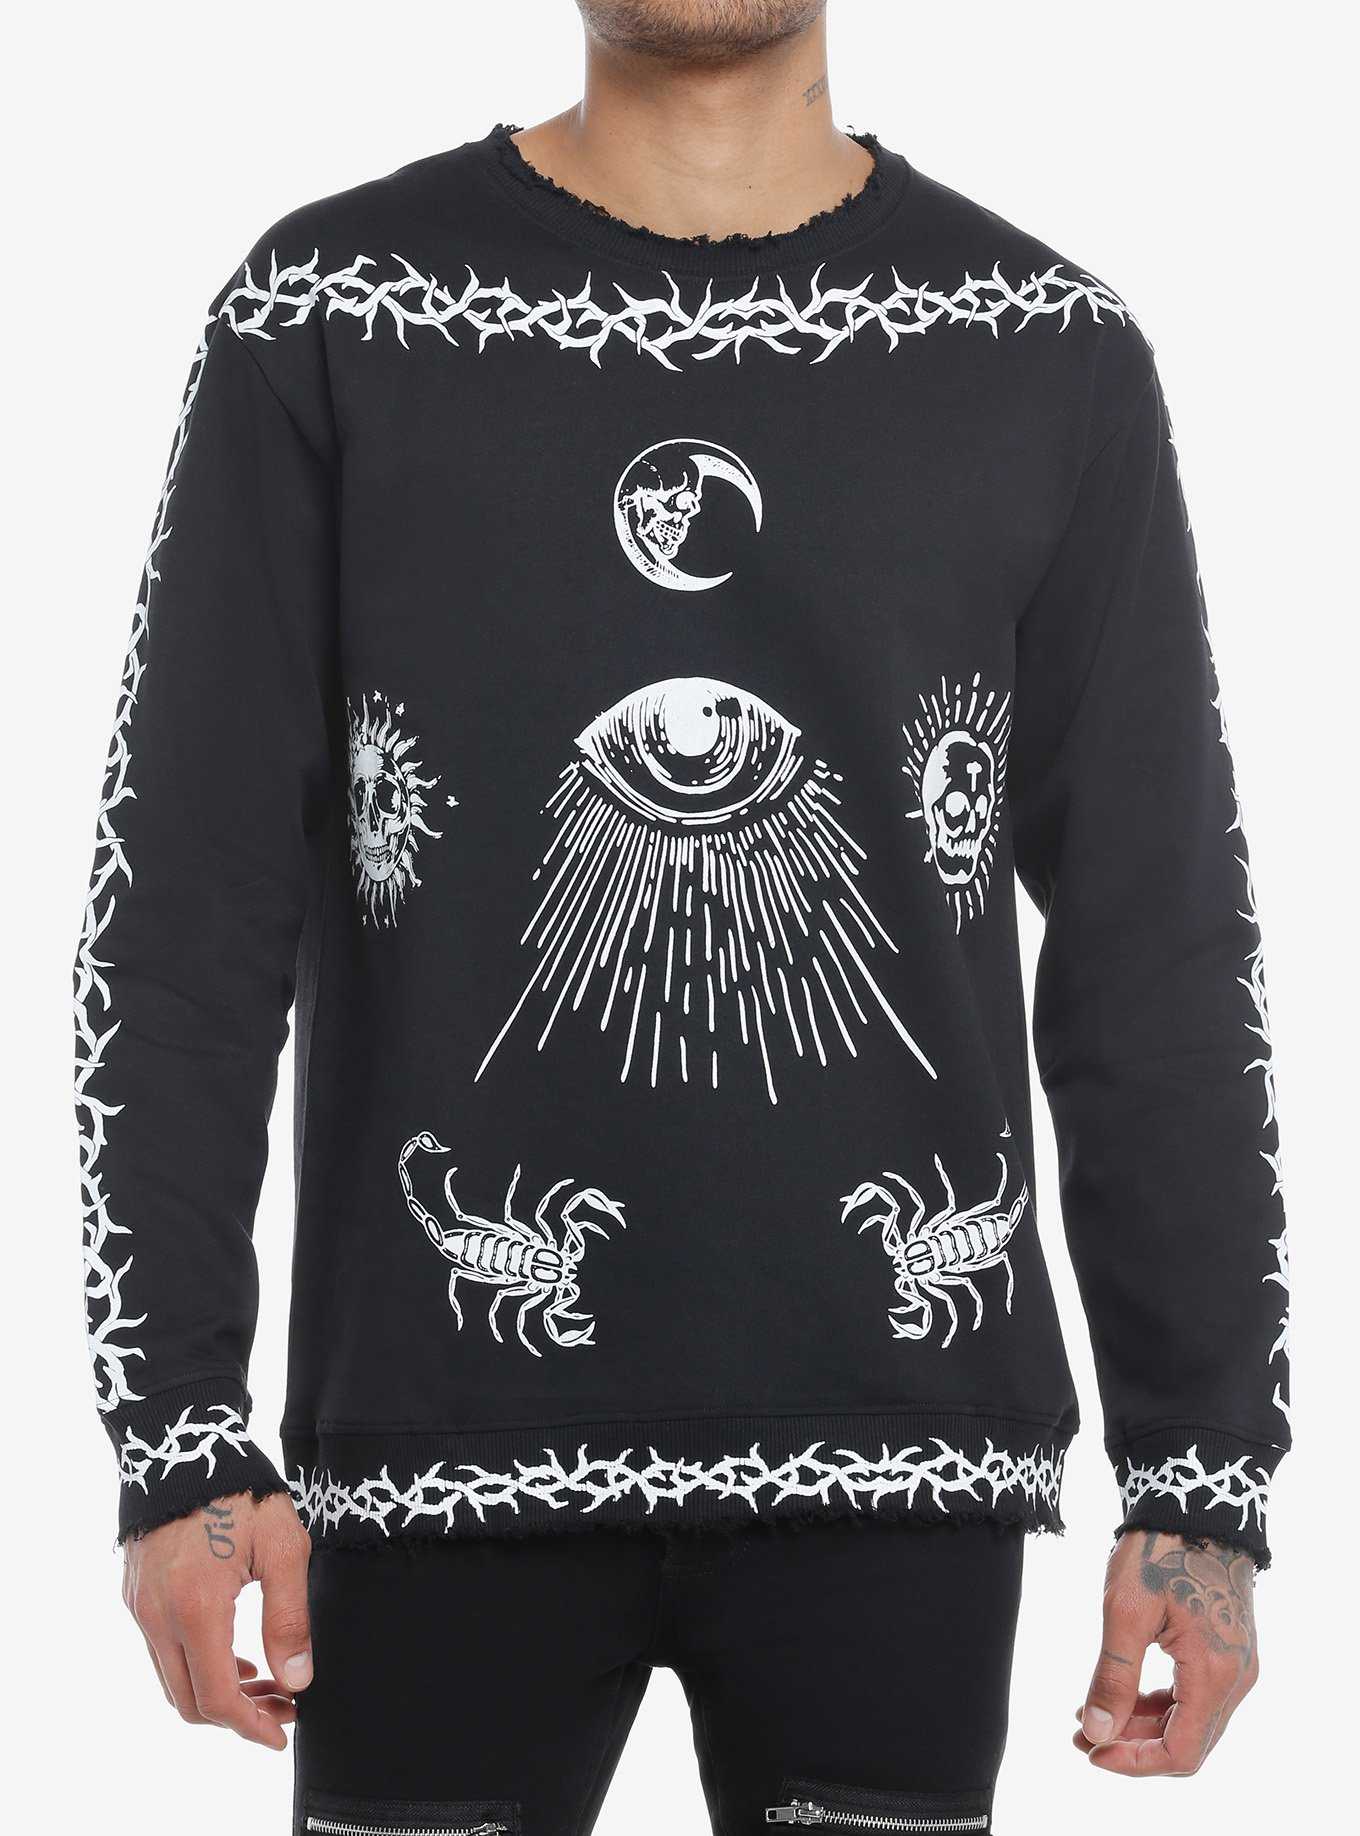 Vines Occult Symbols Long-Sleeve Sweatshirt, , hi-res